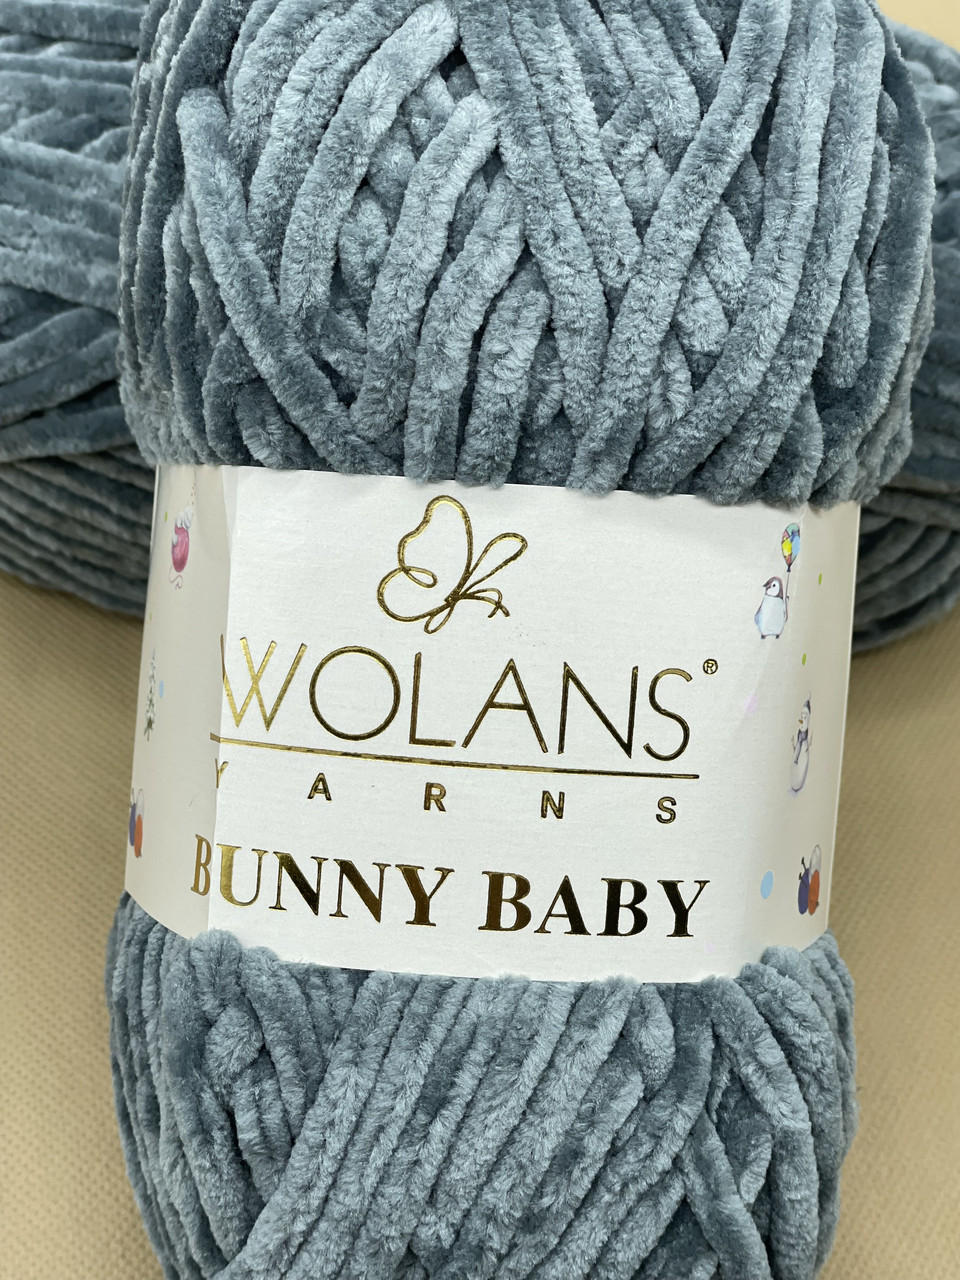 Bunny Baby Wolans Yarns-09